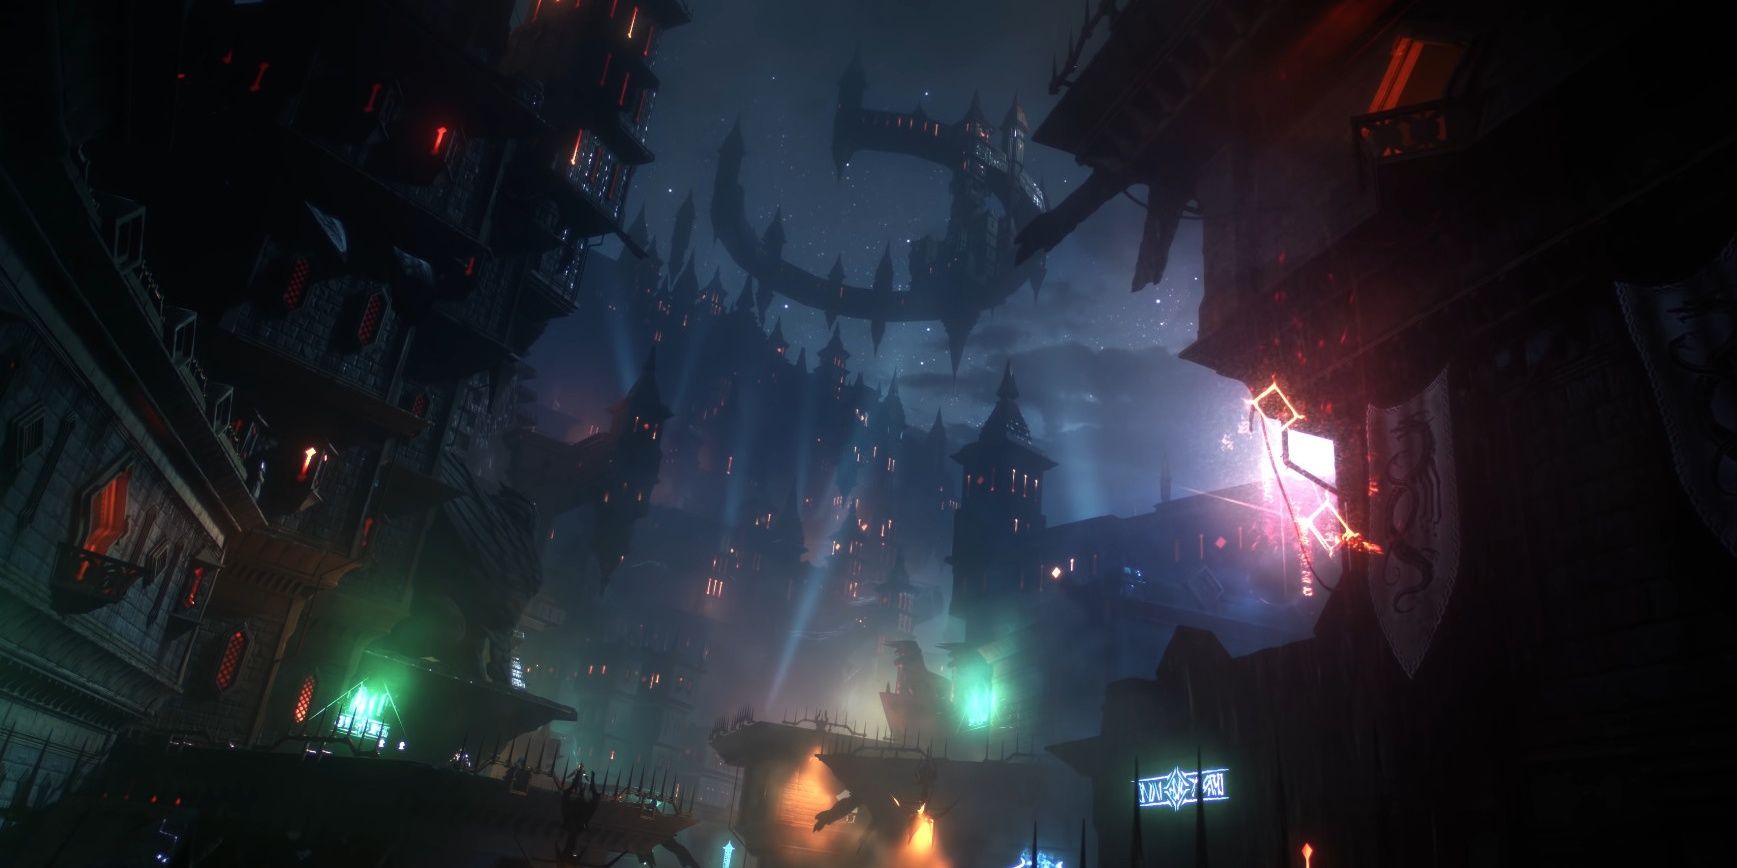 Dragon Age Dreadwolf's enviromental concept art looks amazing